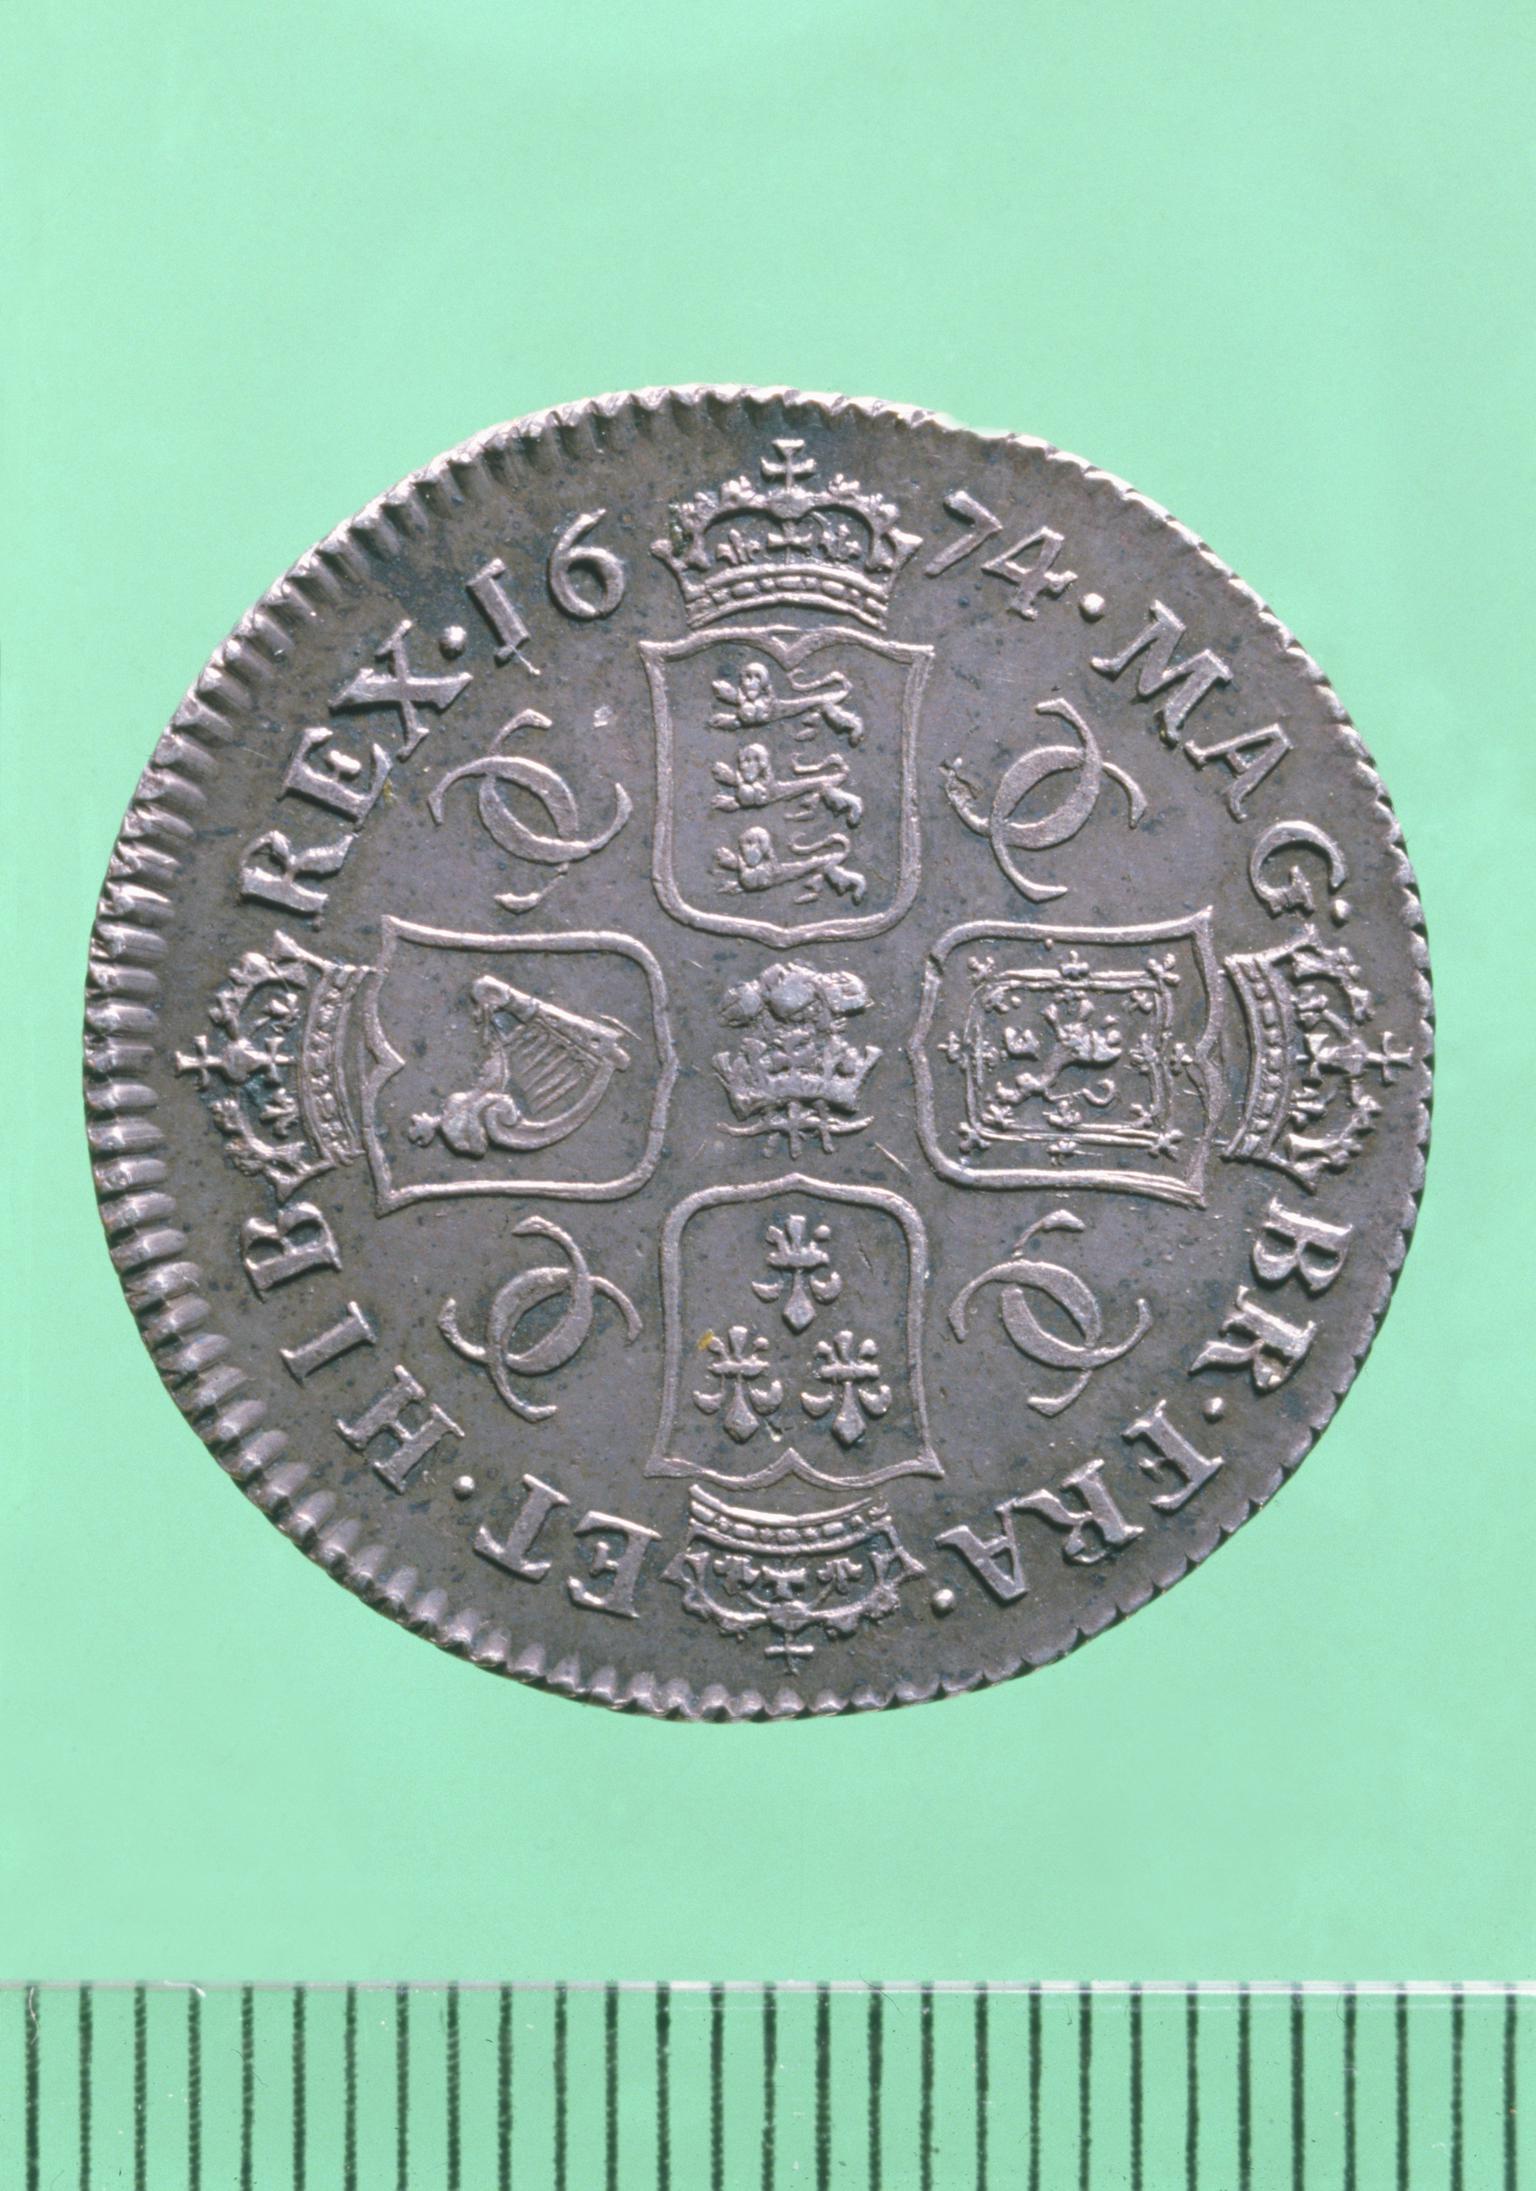 Charles II shilling